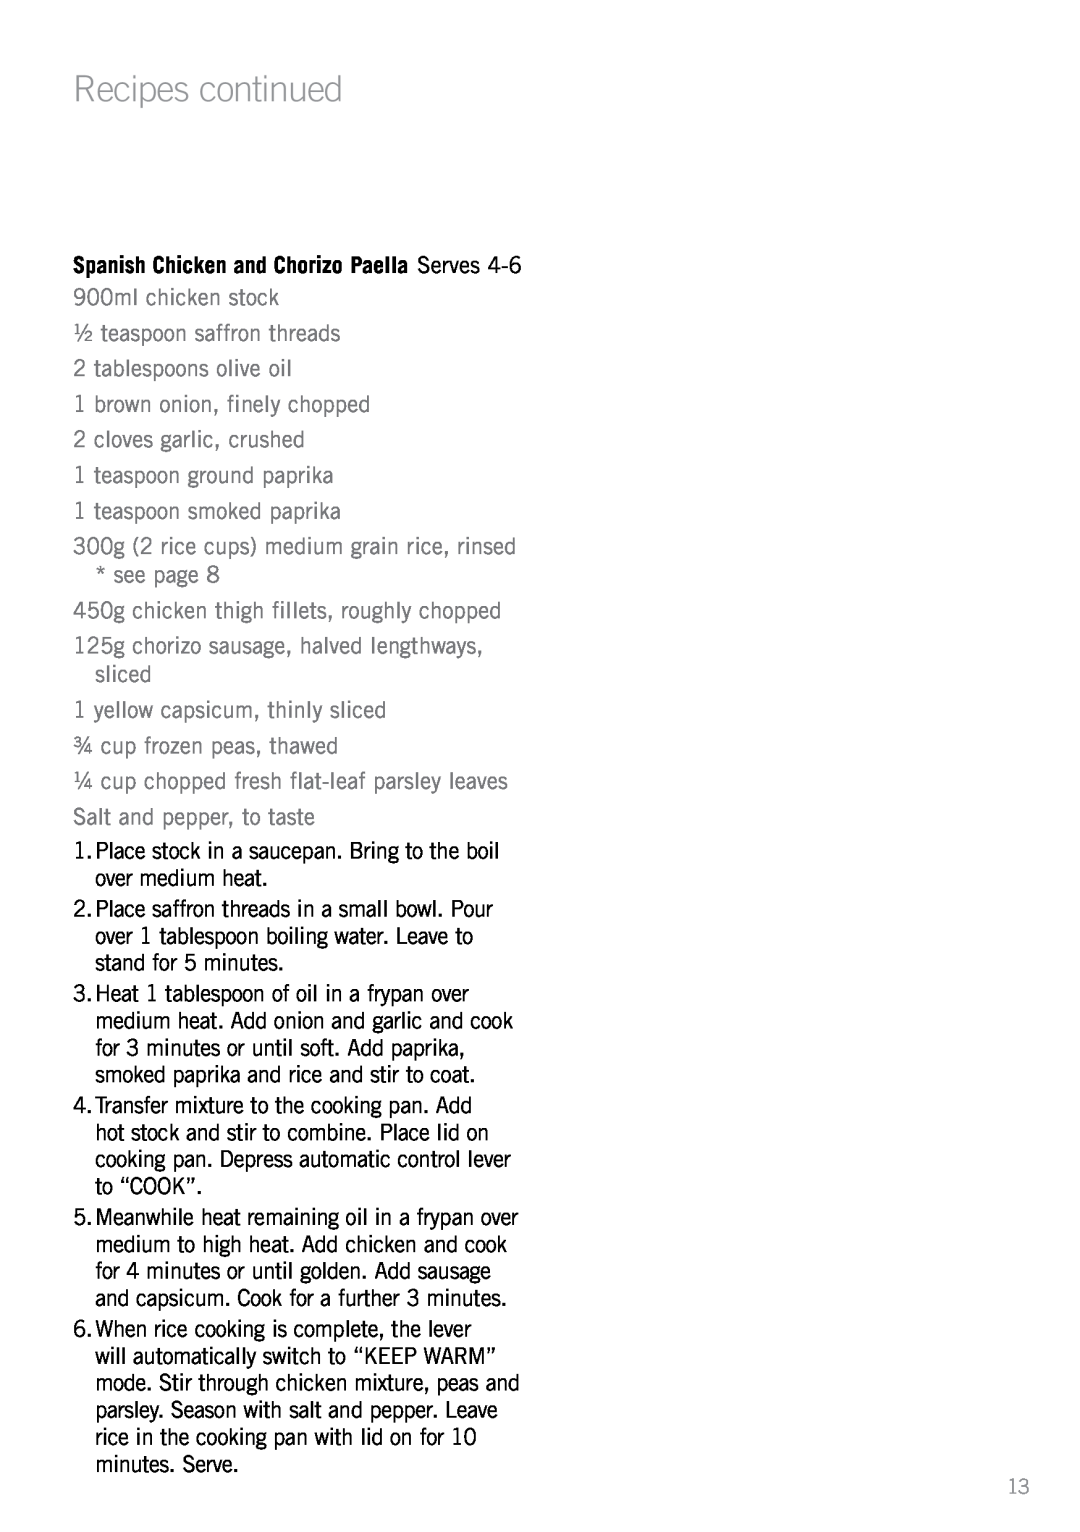 Sunbeam RC2350 Recipes continued, Spanish Chicken and Chorizo Paella Serves, 900ml chicken stock, cloves garlic, crushed 